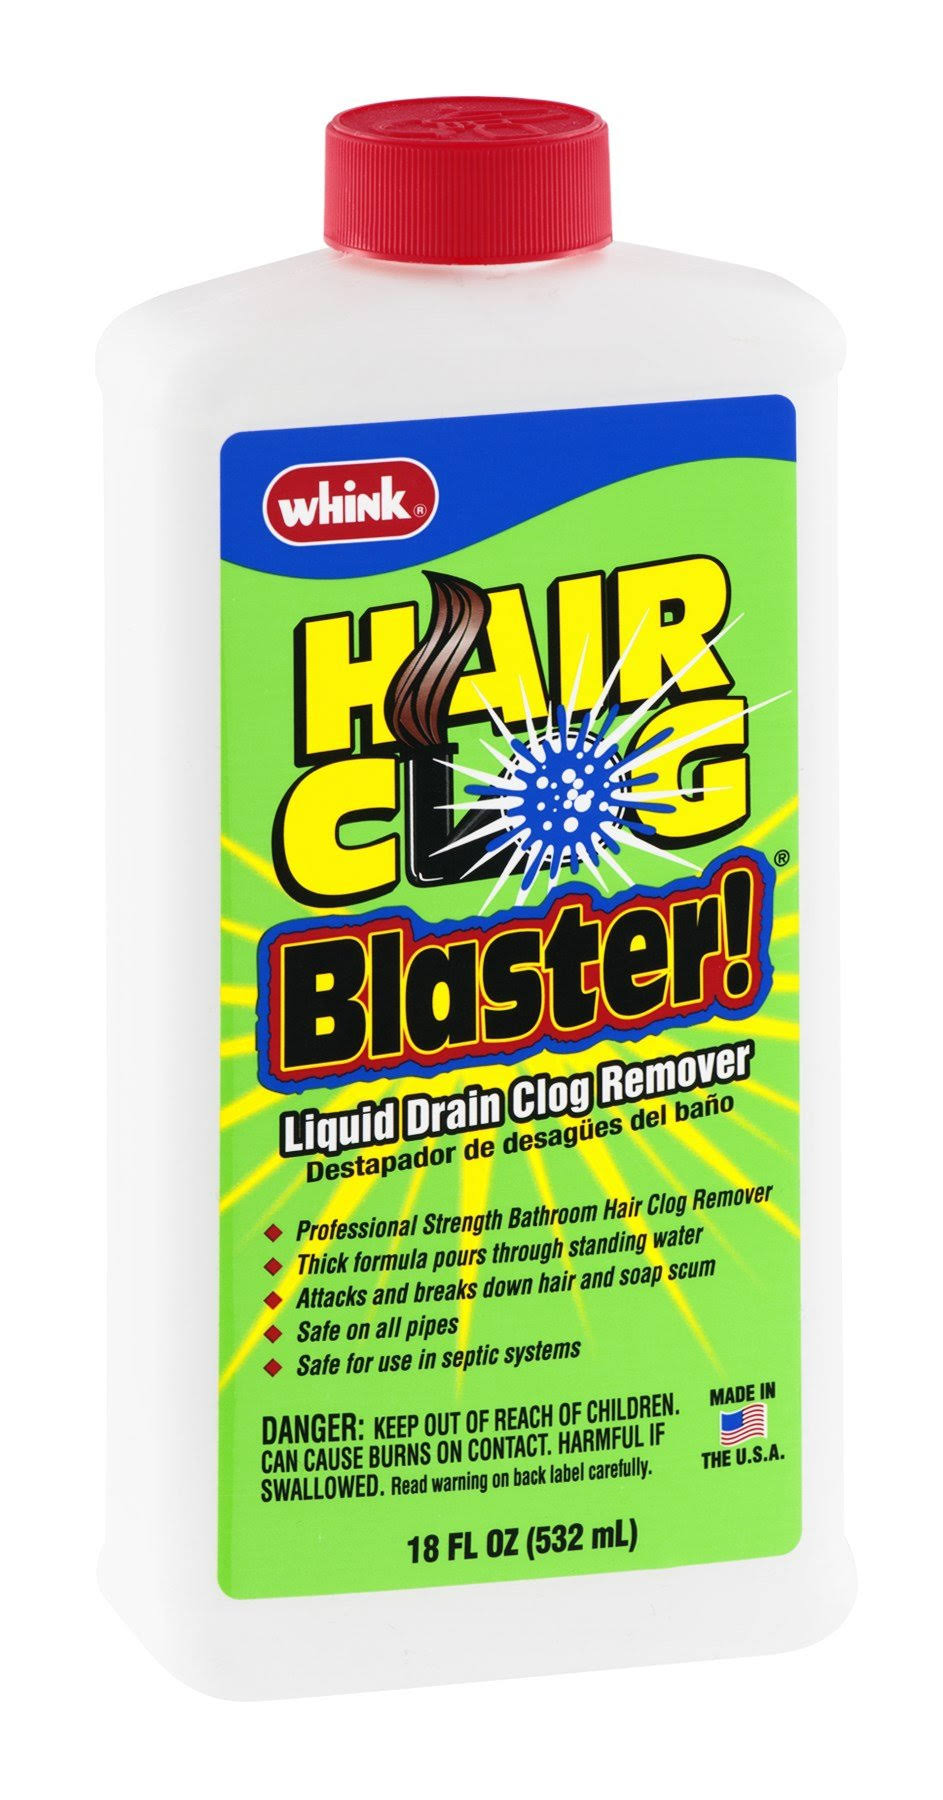 Whink Hair Clog Blaster! Liquid Drain Clog Remover - 18 oz